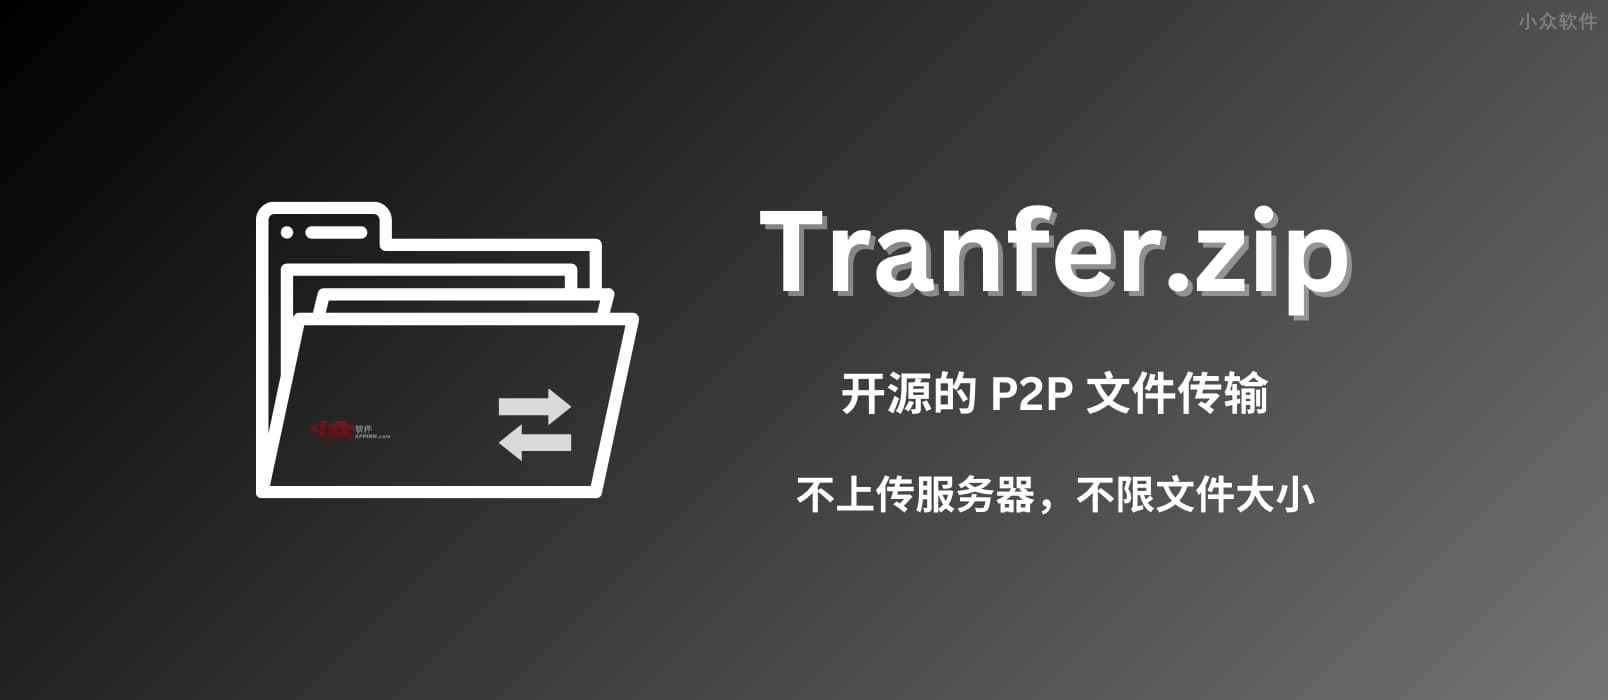 免费、开源、P2P、不限量，用 Transfer.zip 传输任意大小文件，不限速